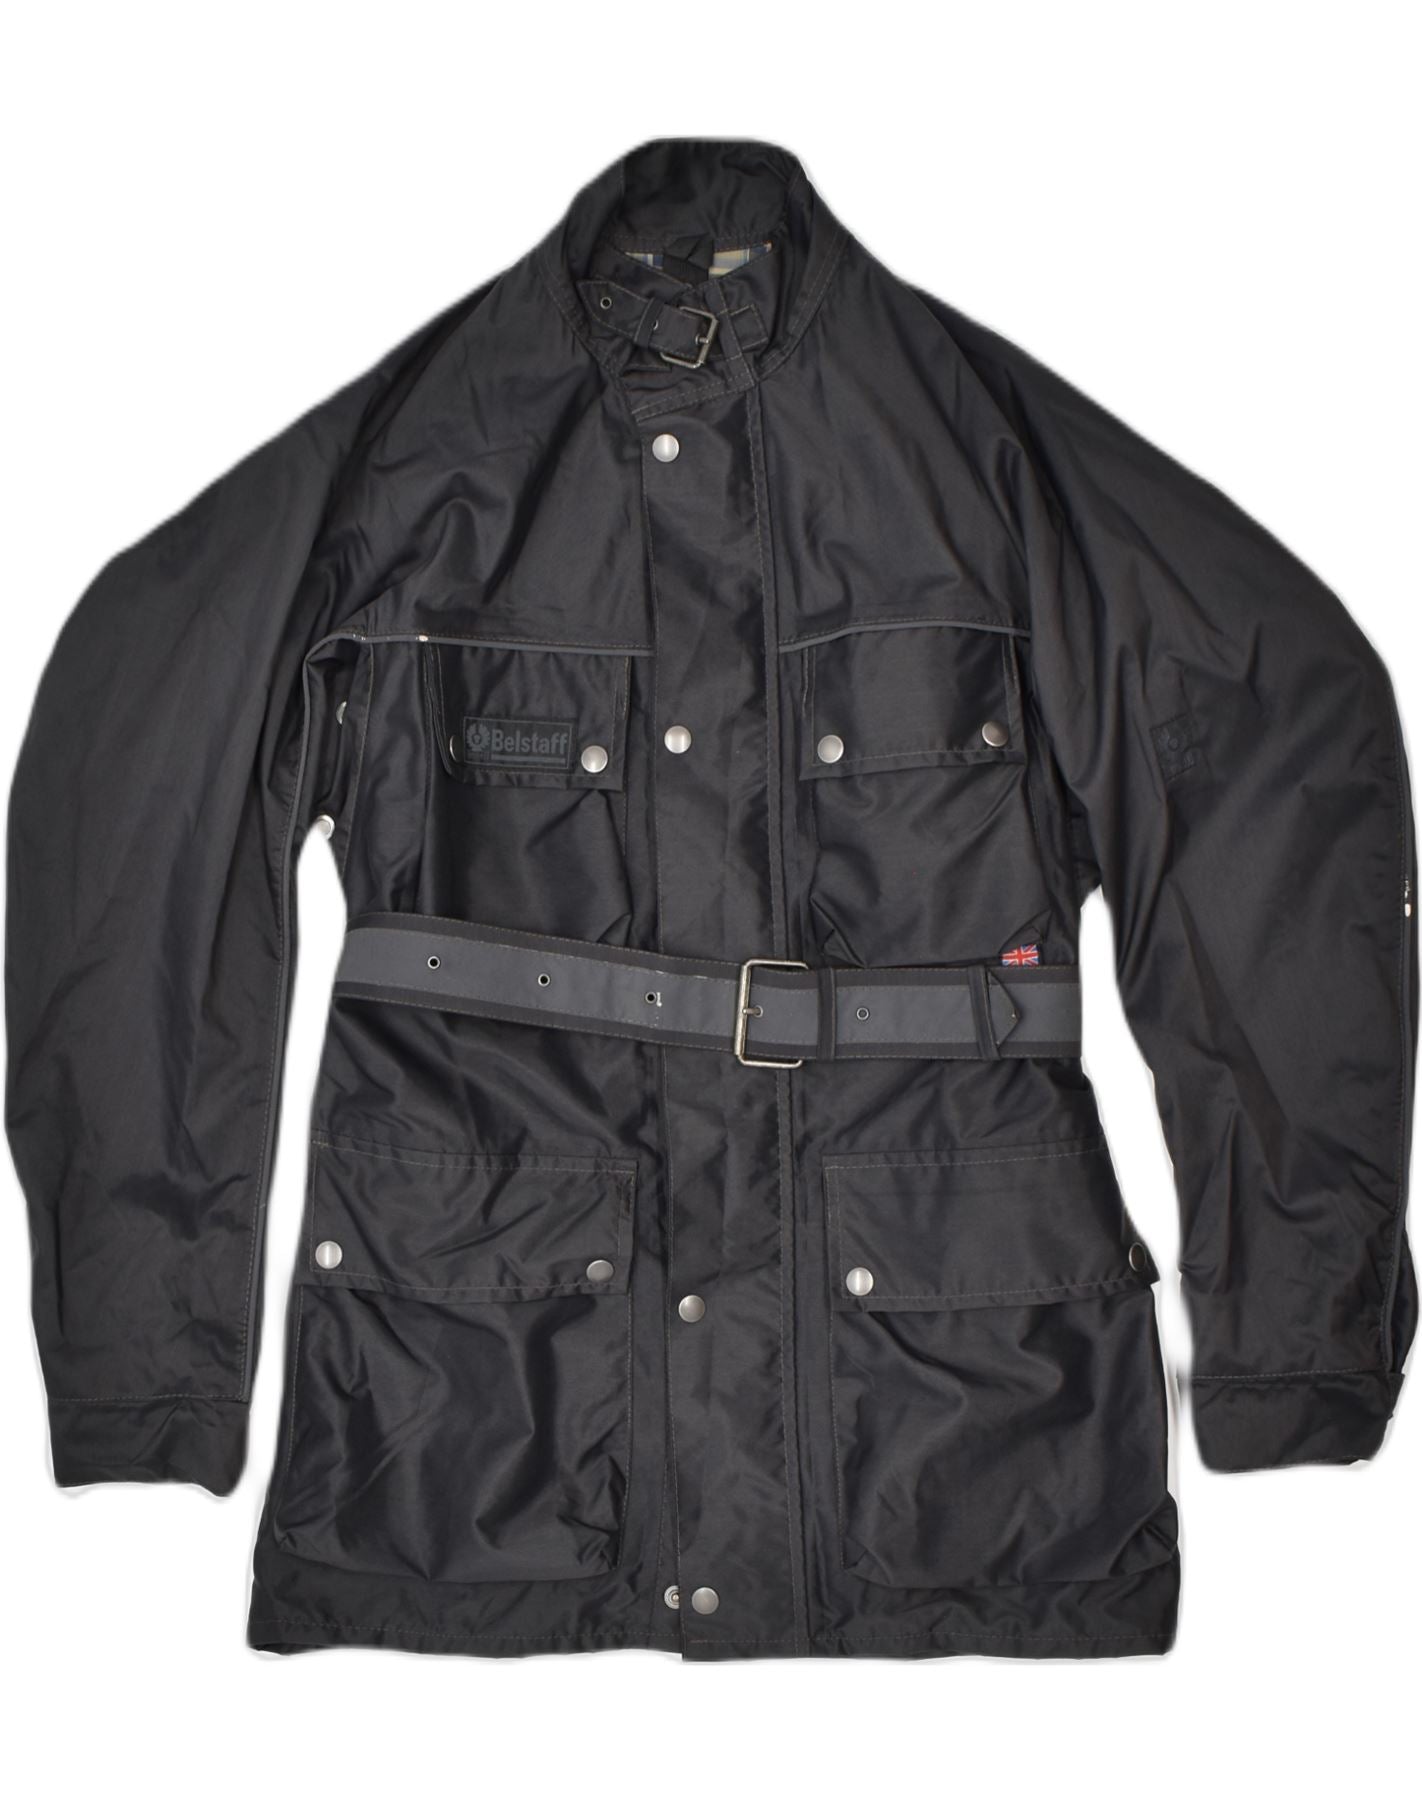 BELSTAFF Mens Utility Jacket UK 42 Large Black Polyamide Motorcycle, Vintage & Second-Hand Clothing Online